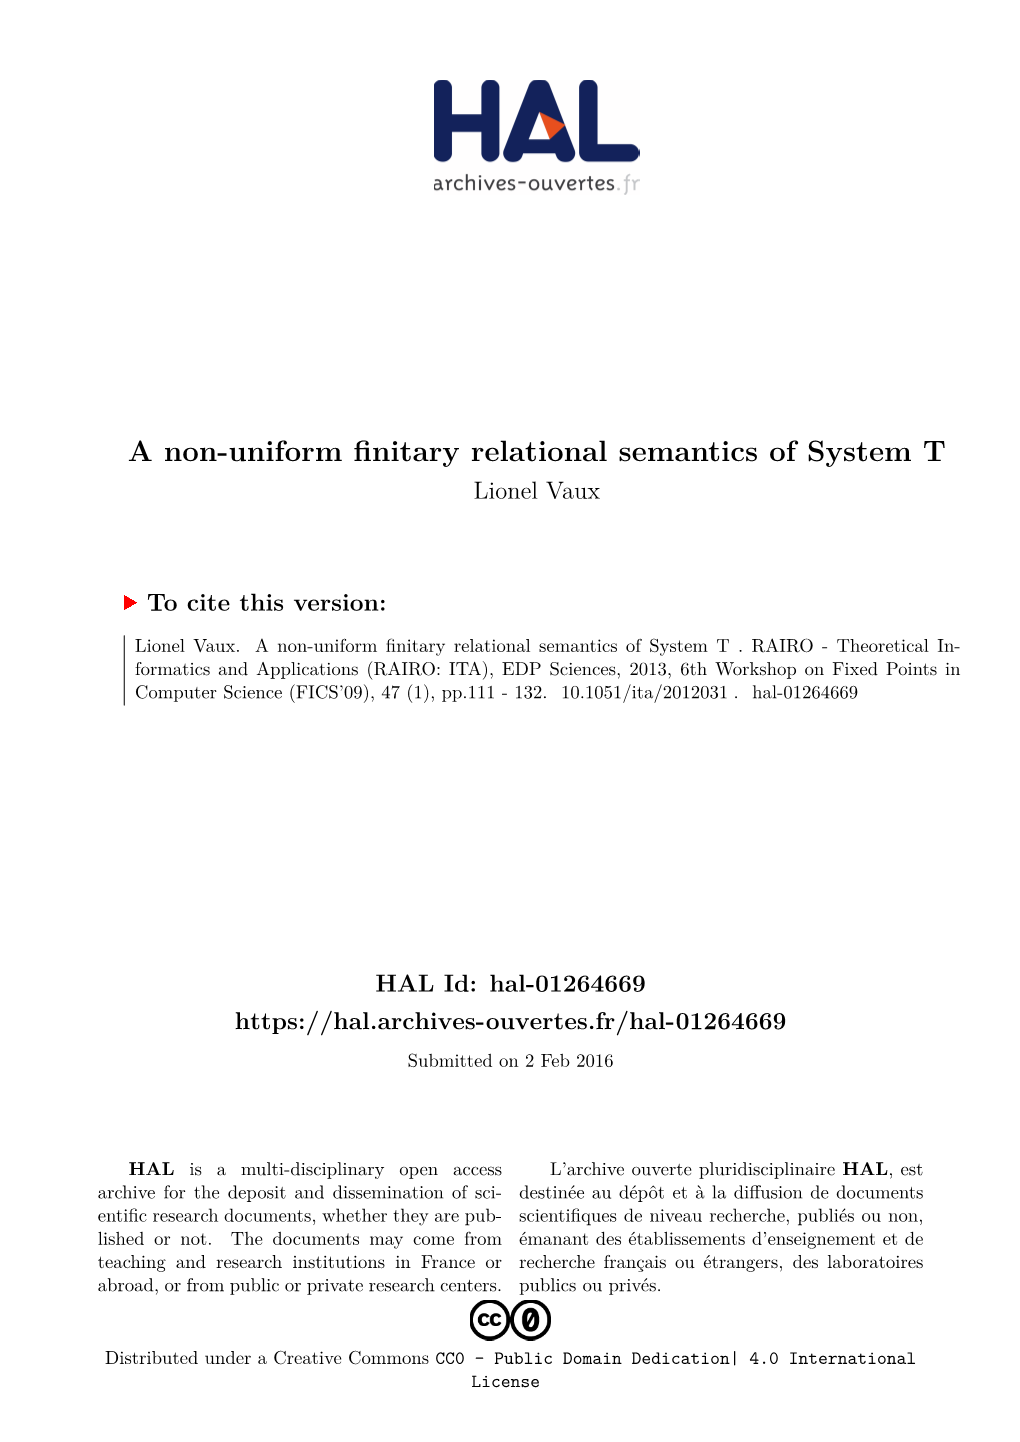 A Non-Uniform Finitary Relational Semantics of System T Lionel Vaux